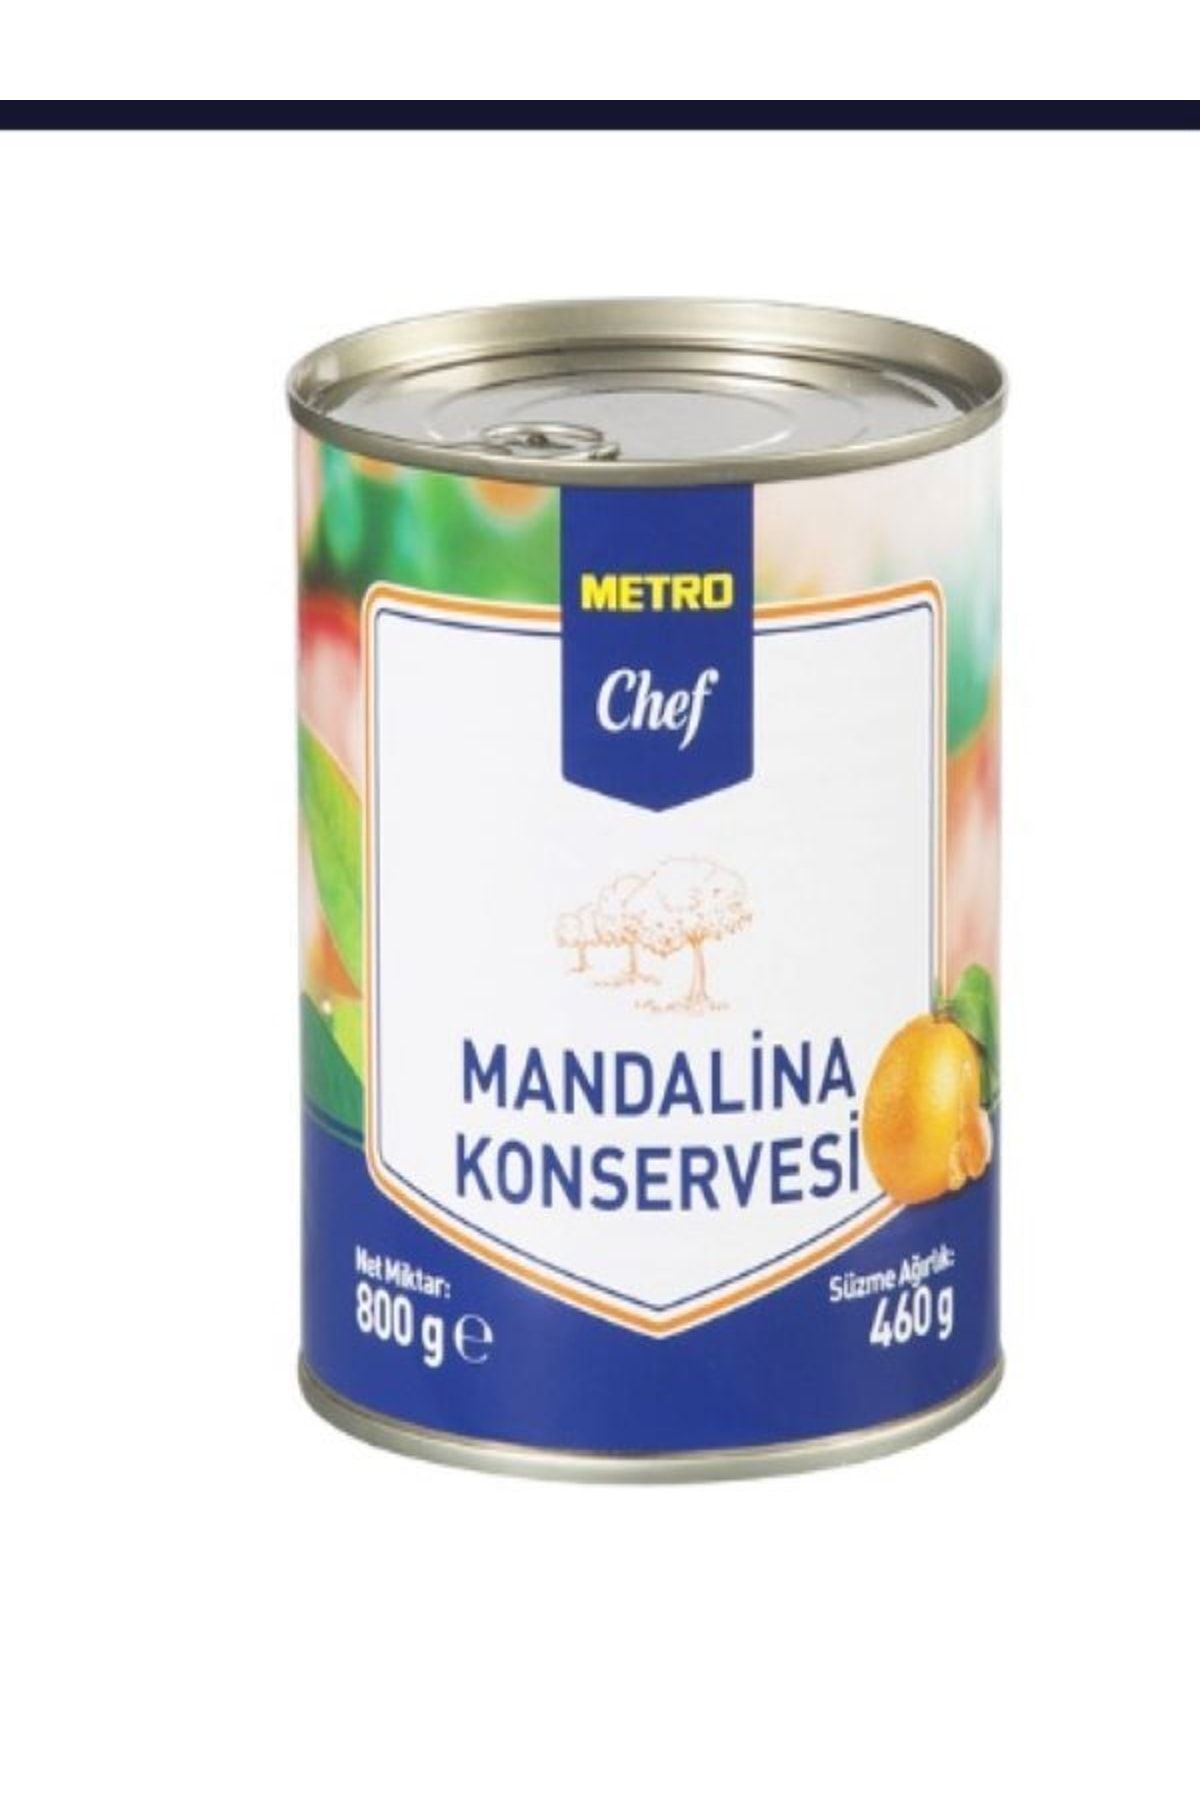 Metro Chef Mandalina Konservesi